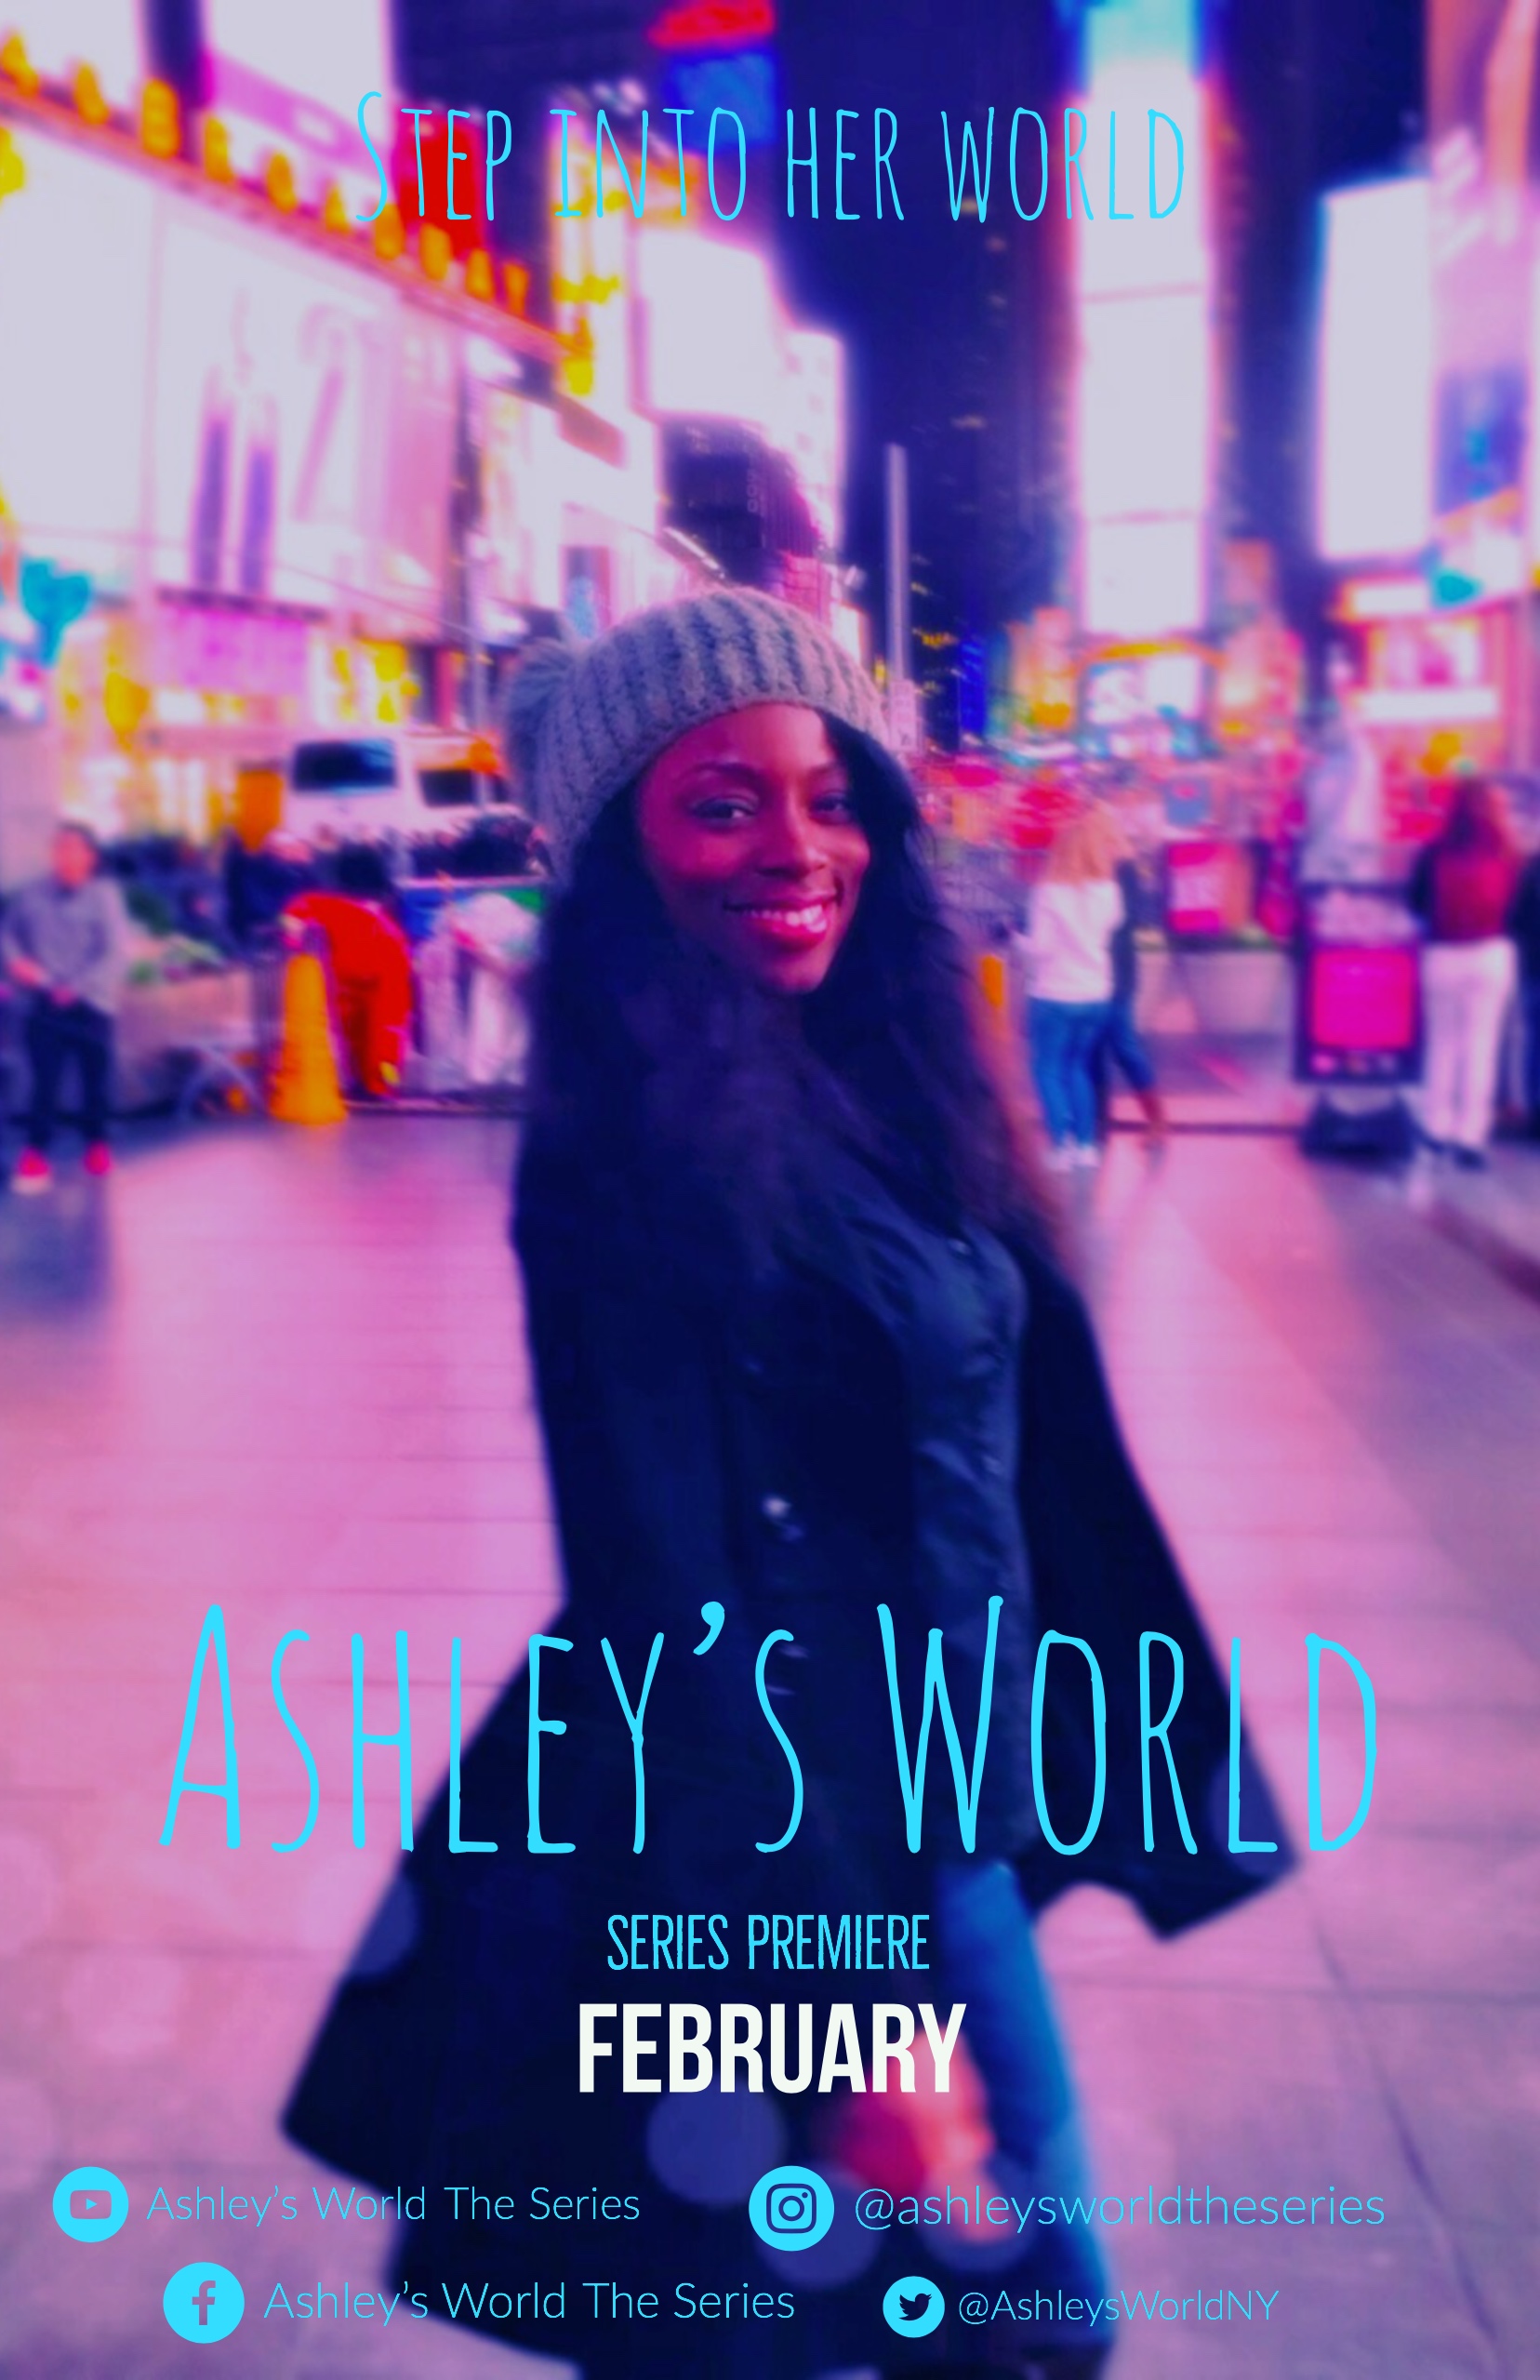 Ashley's World